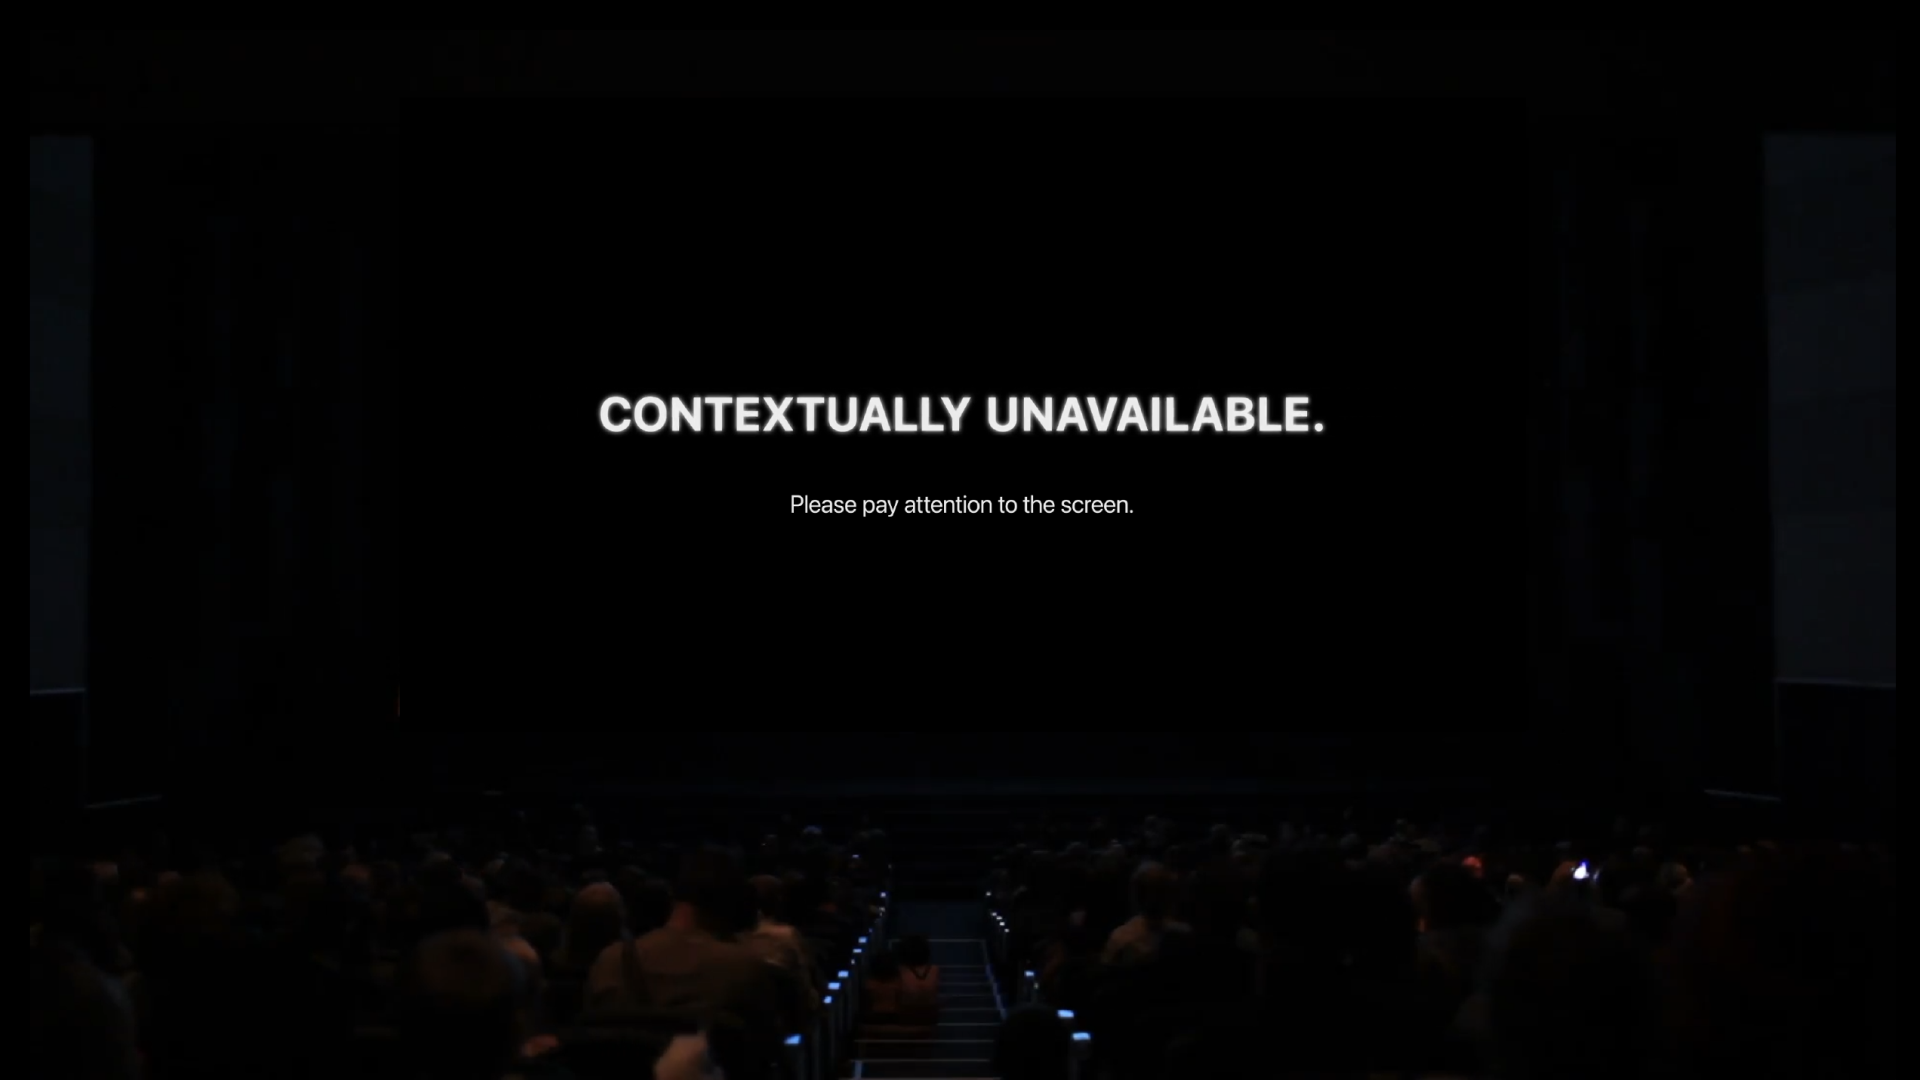 "Contextually unavailable" cinema execution.